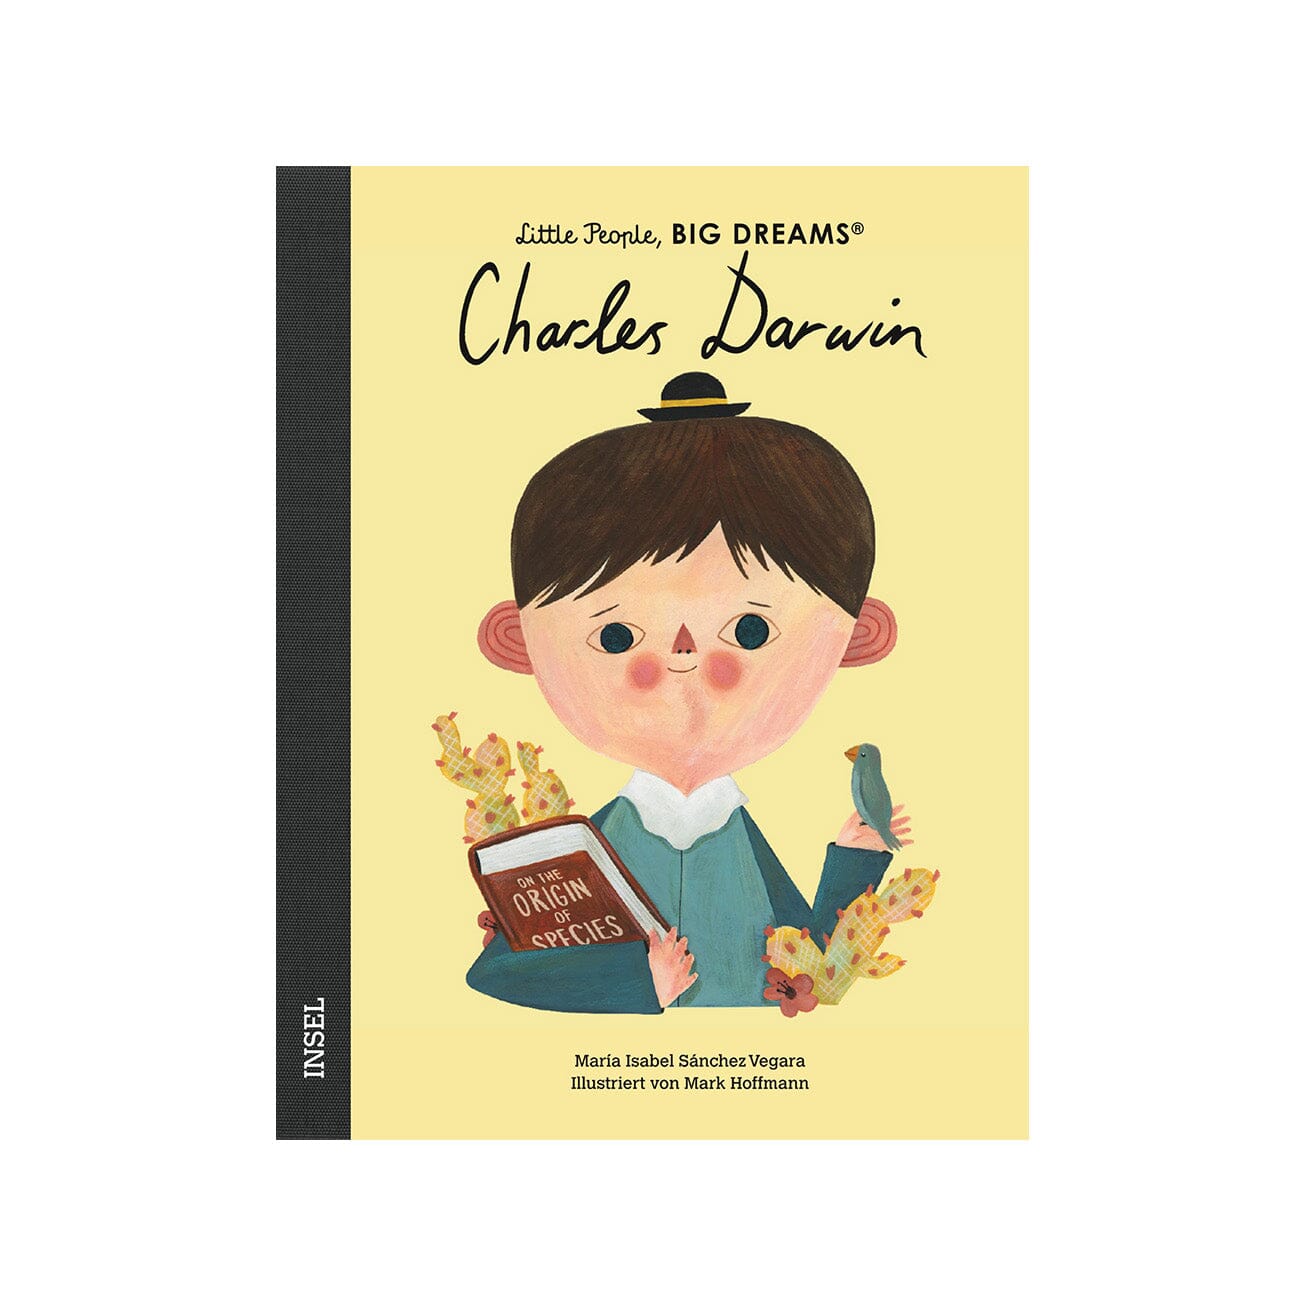 Little People, Big Dreams "Charles Darwin" Buch Insel Verlag 